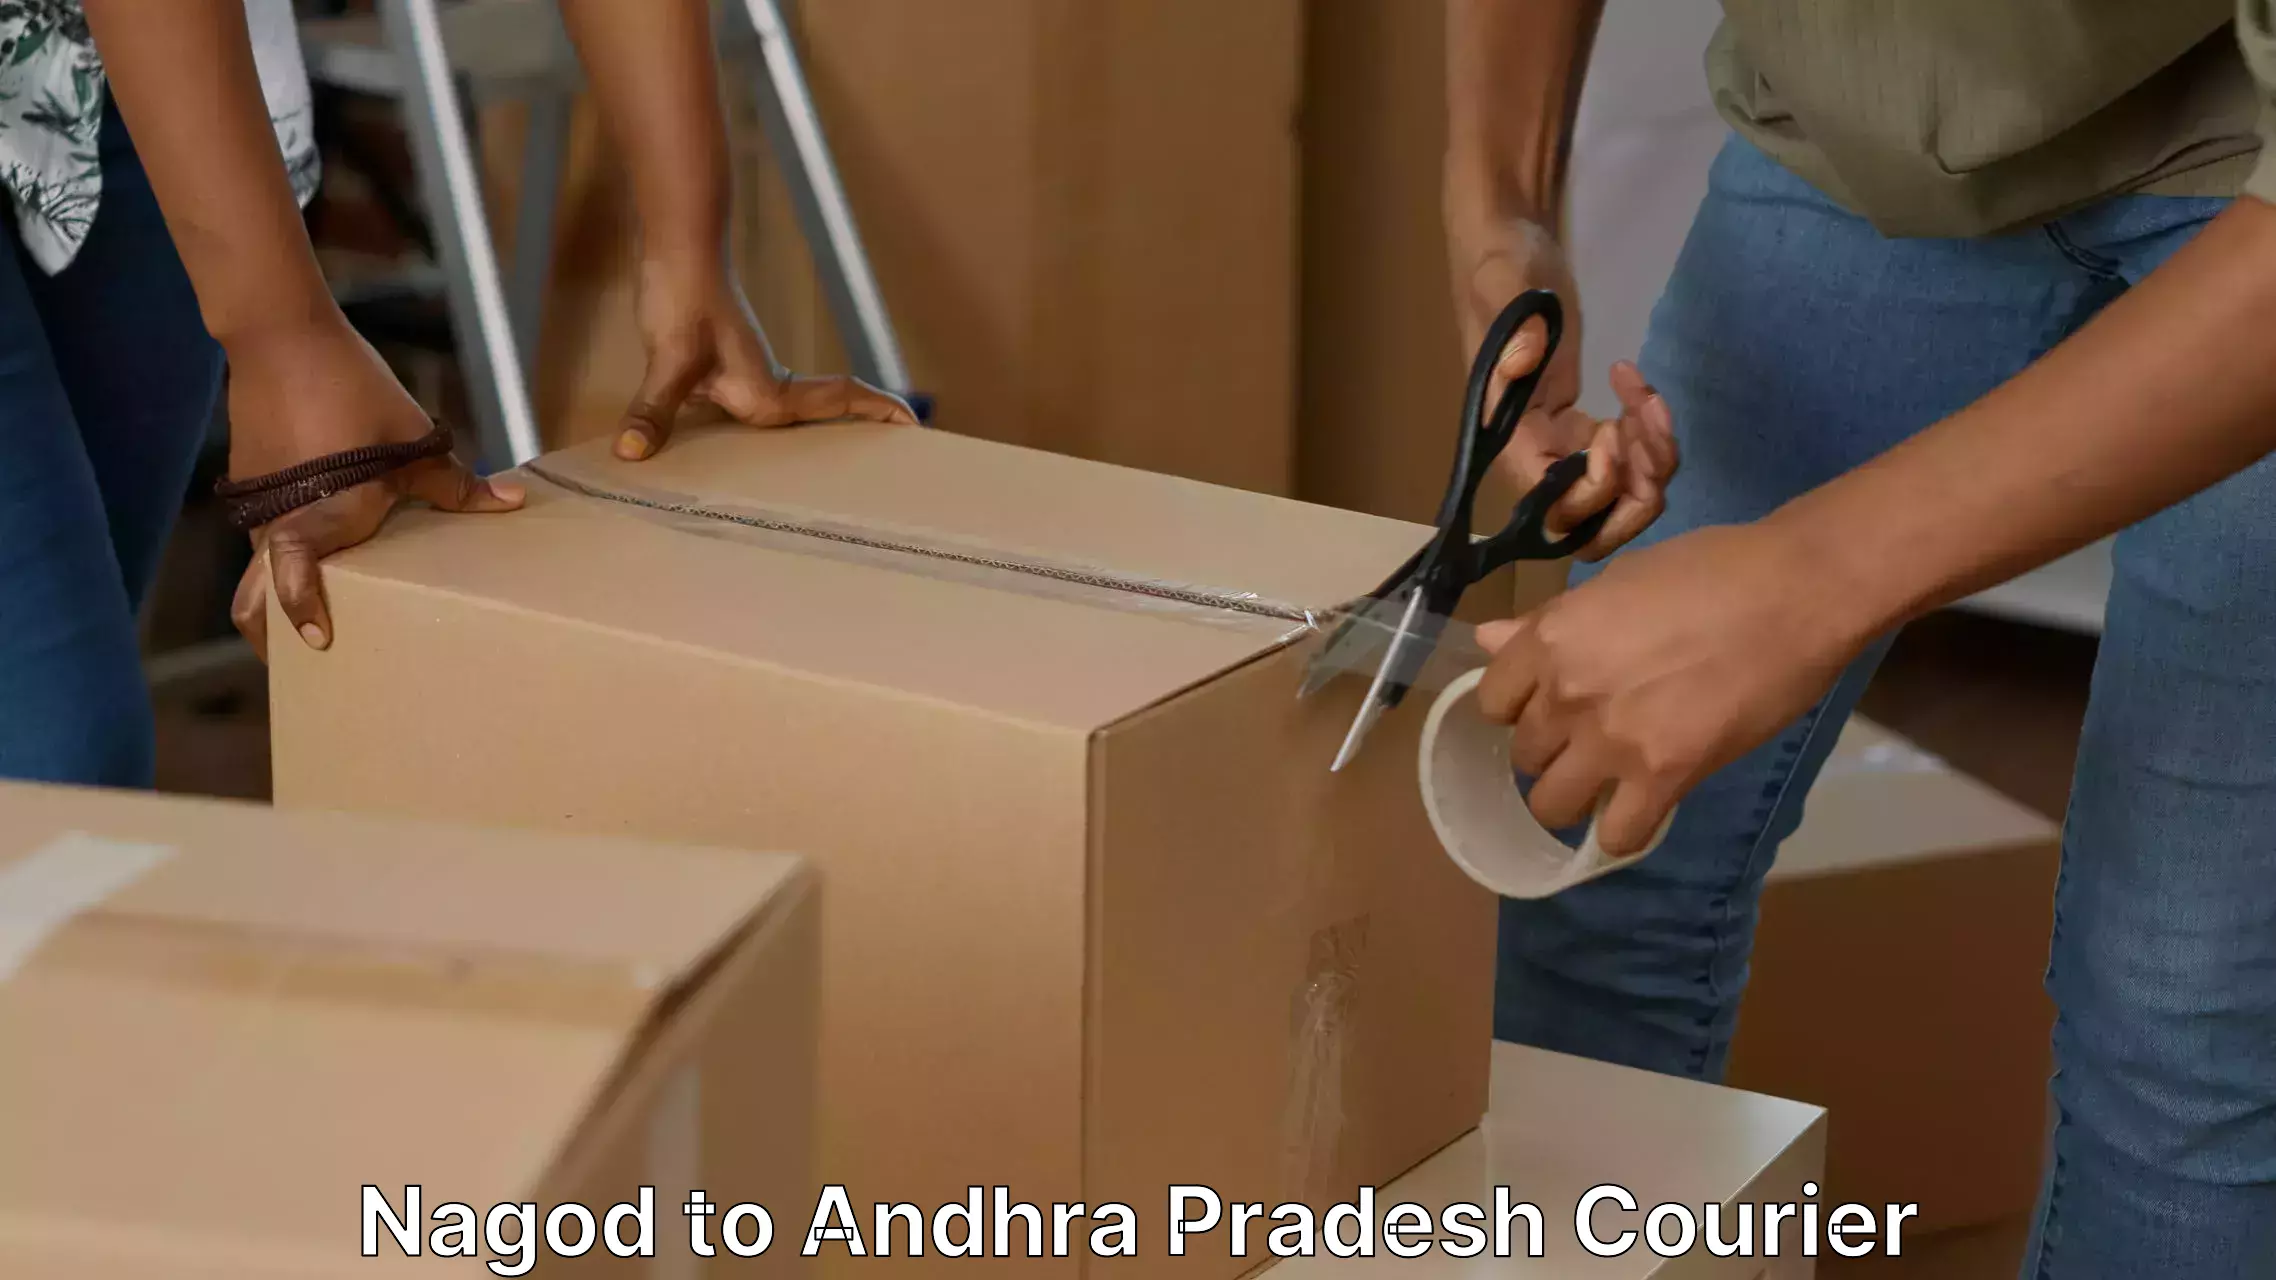 Professional moving company Nagod to Andhra Pradesh